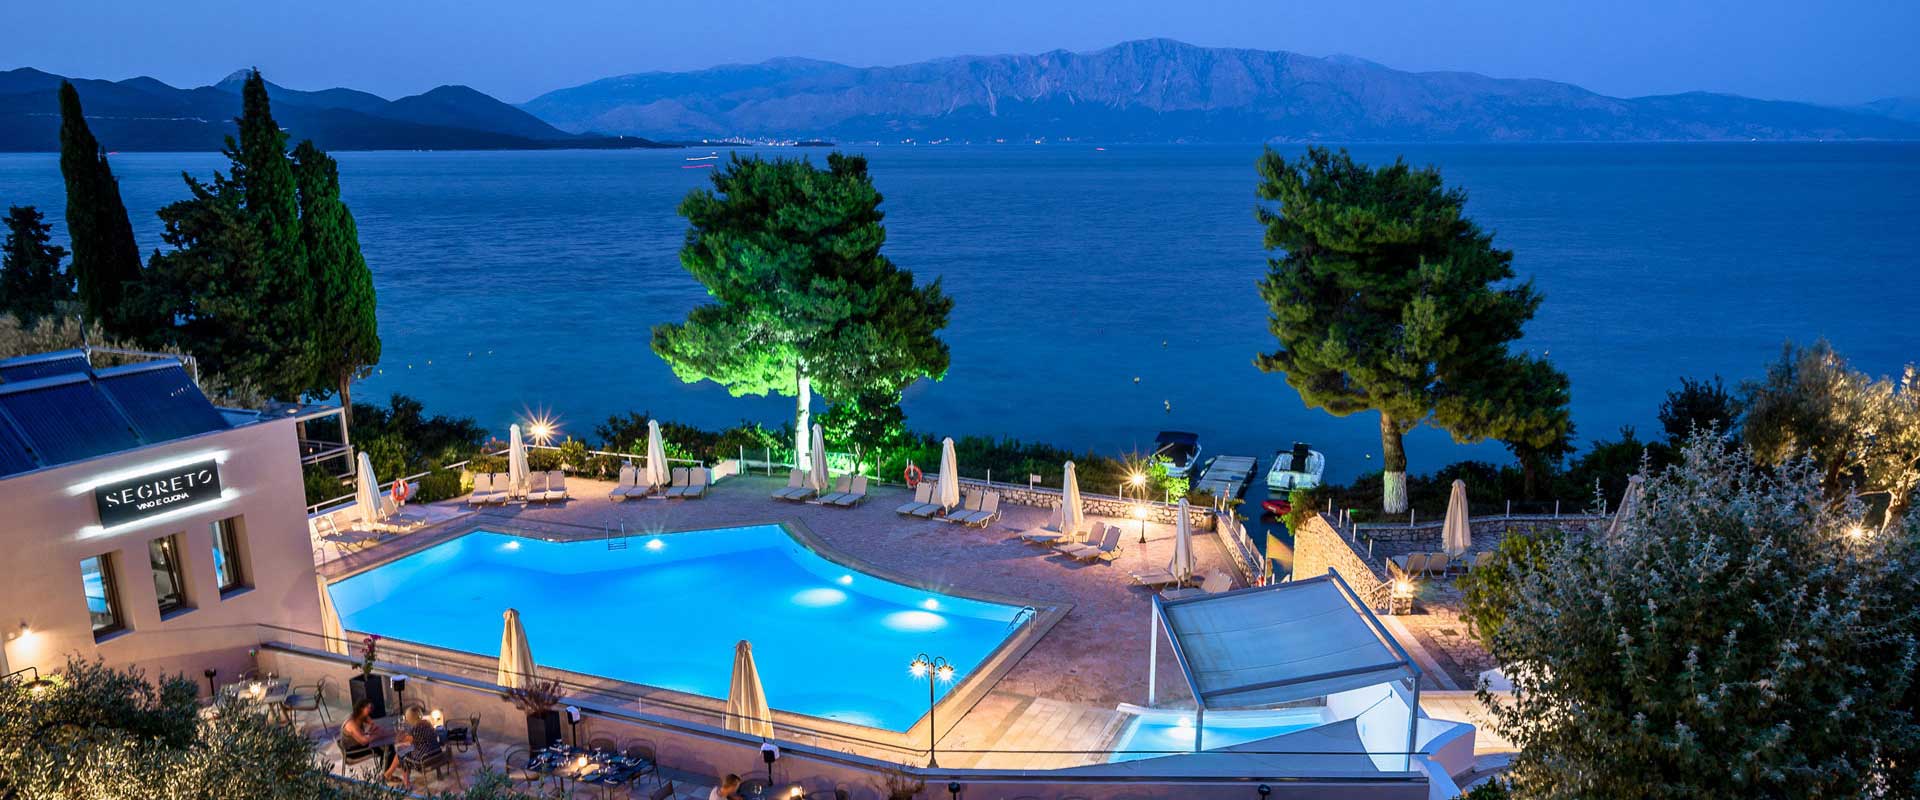 Porto Galini Seaside Resort and Spa Lefkada, Greece